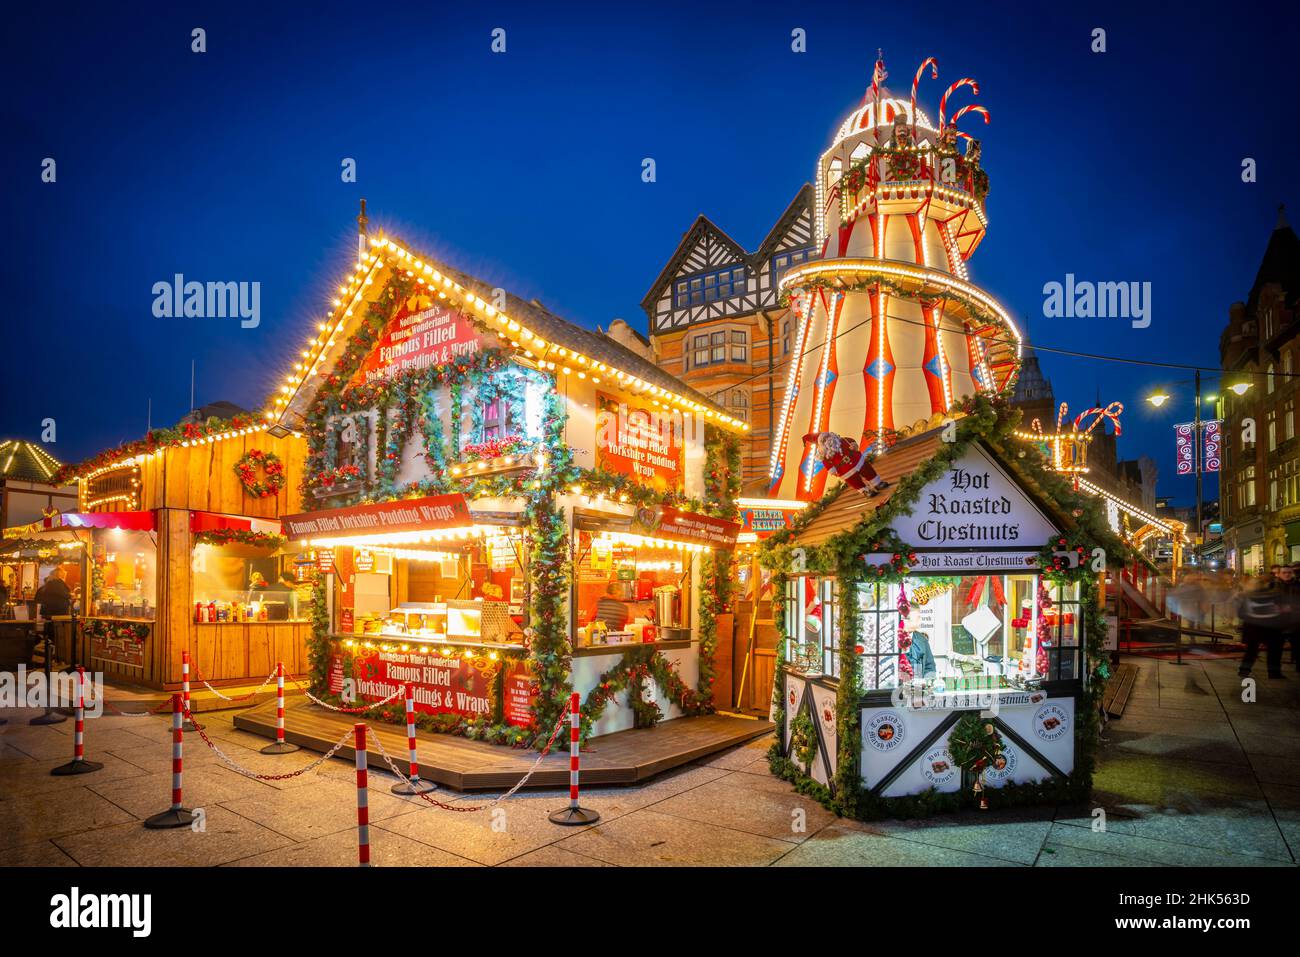 View of Christmas market stalls on Old Market Square, Nottingham, Nottinghamshire, England, United Kingdom, Europe Stock Photo